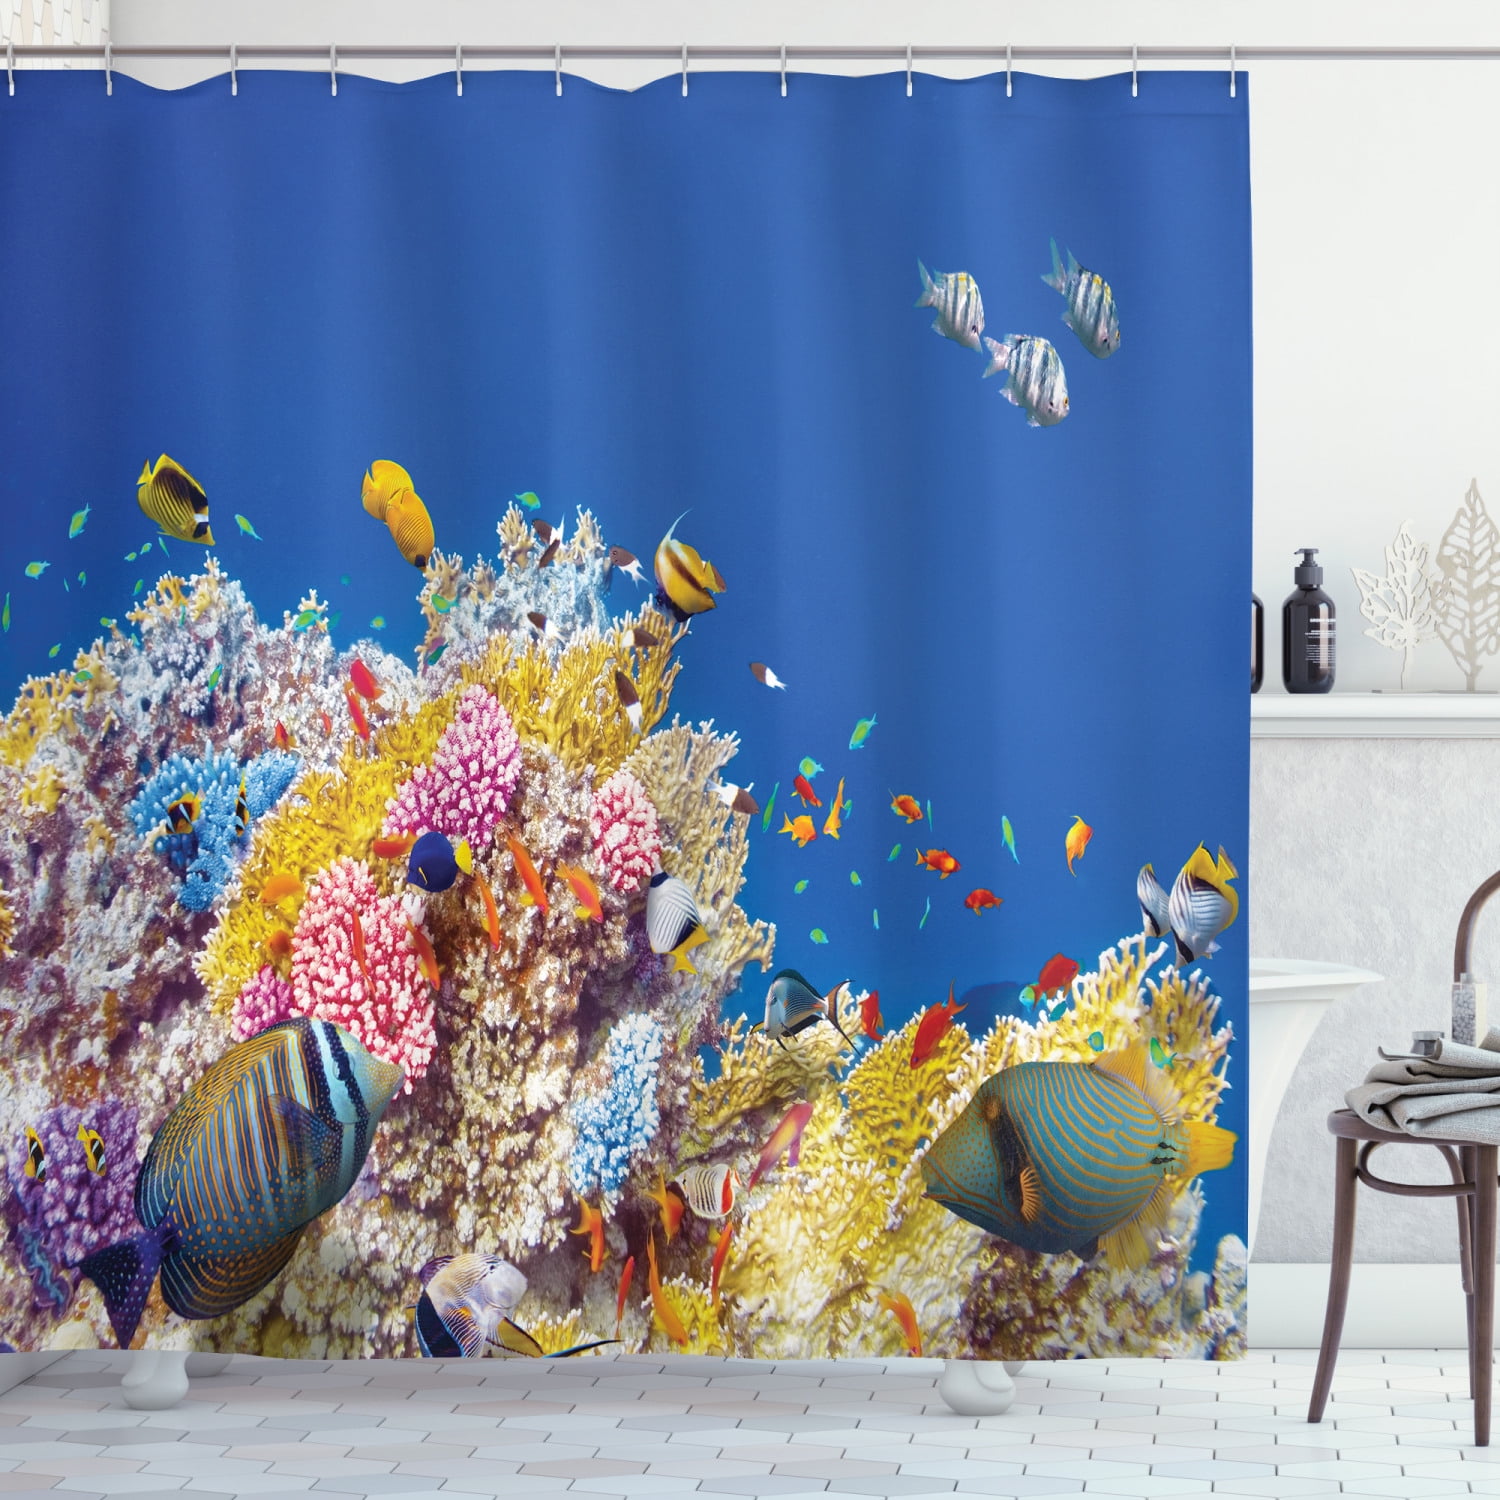 Tropical Ocean Reef Palm Beach Shower Curtain Set for Bathroom Decor w/12 Hooks 